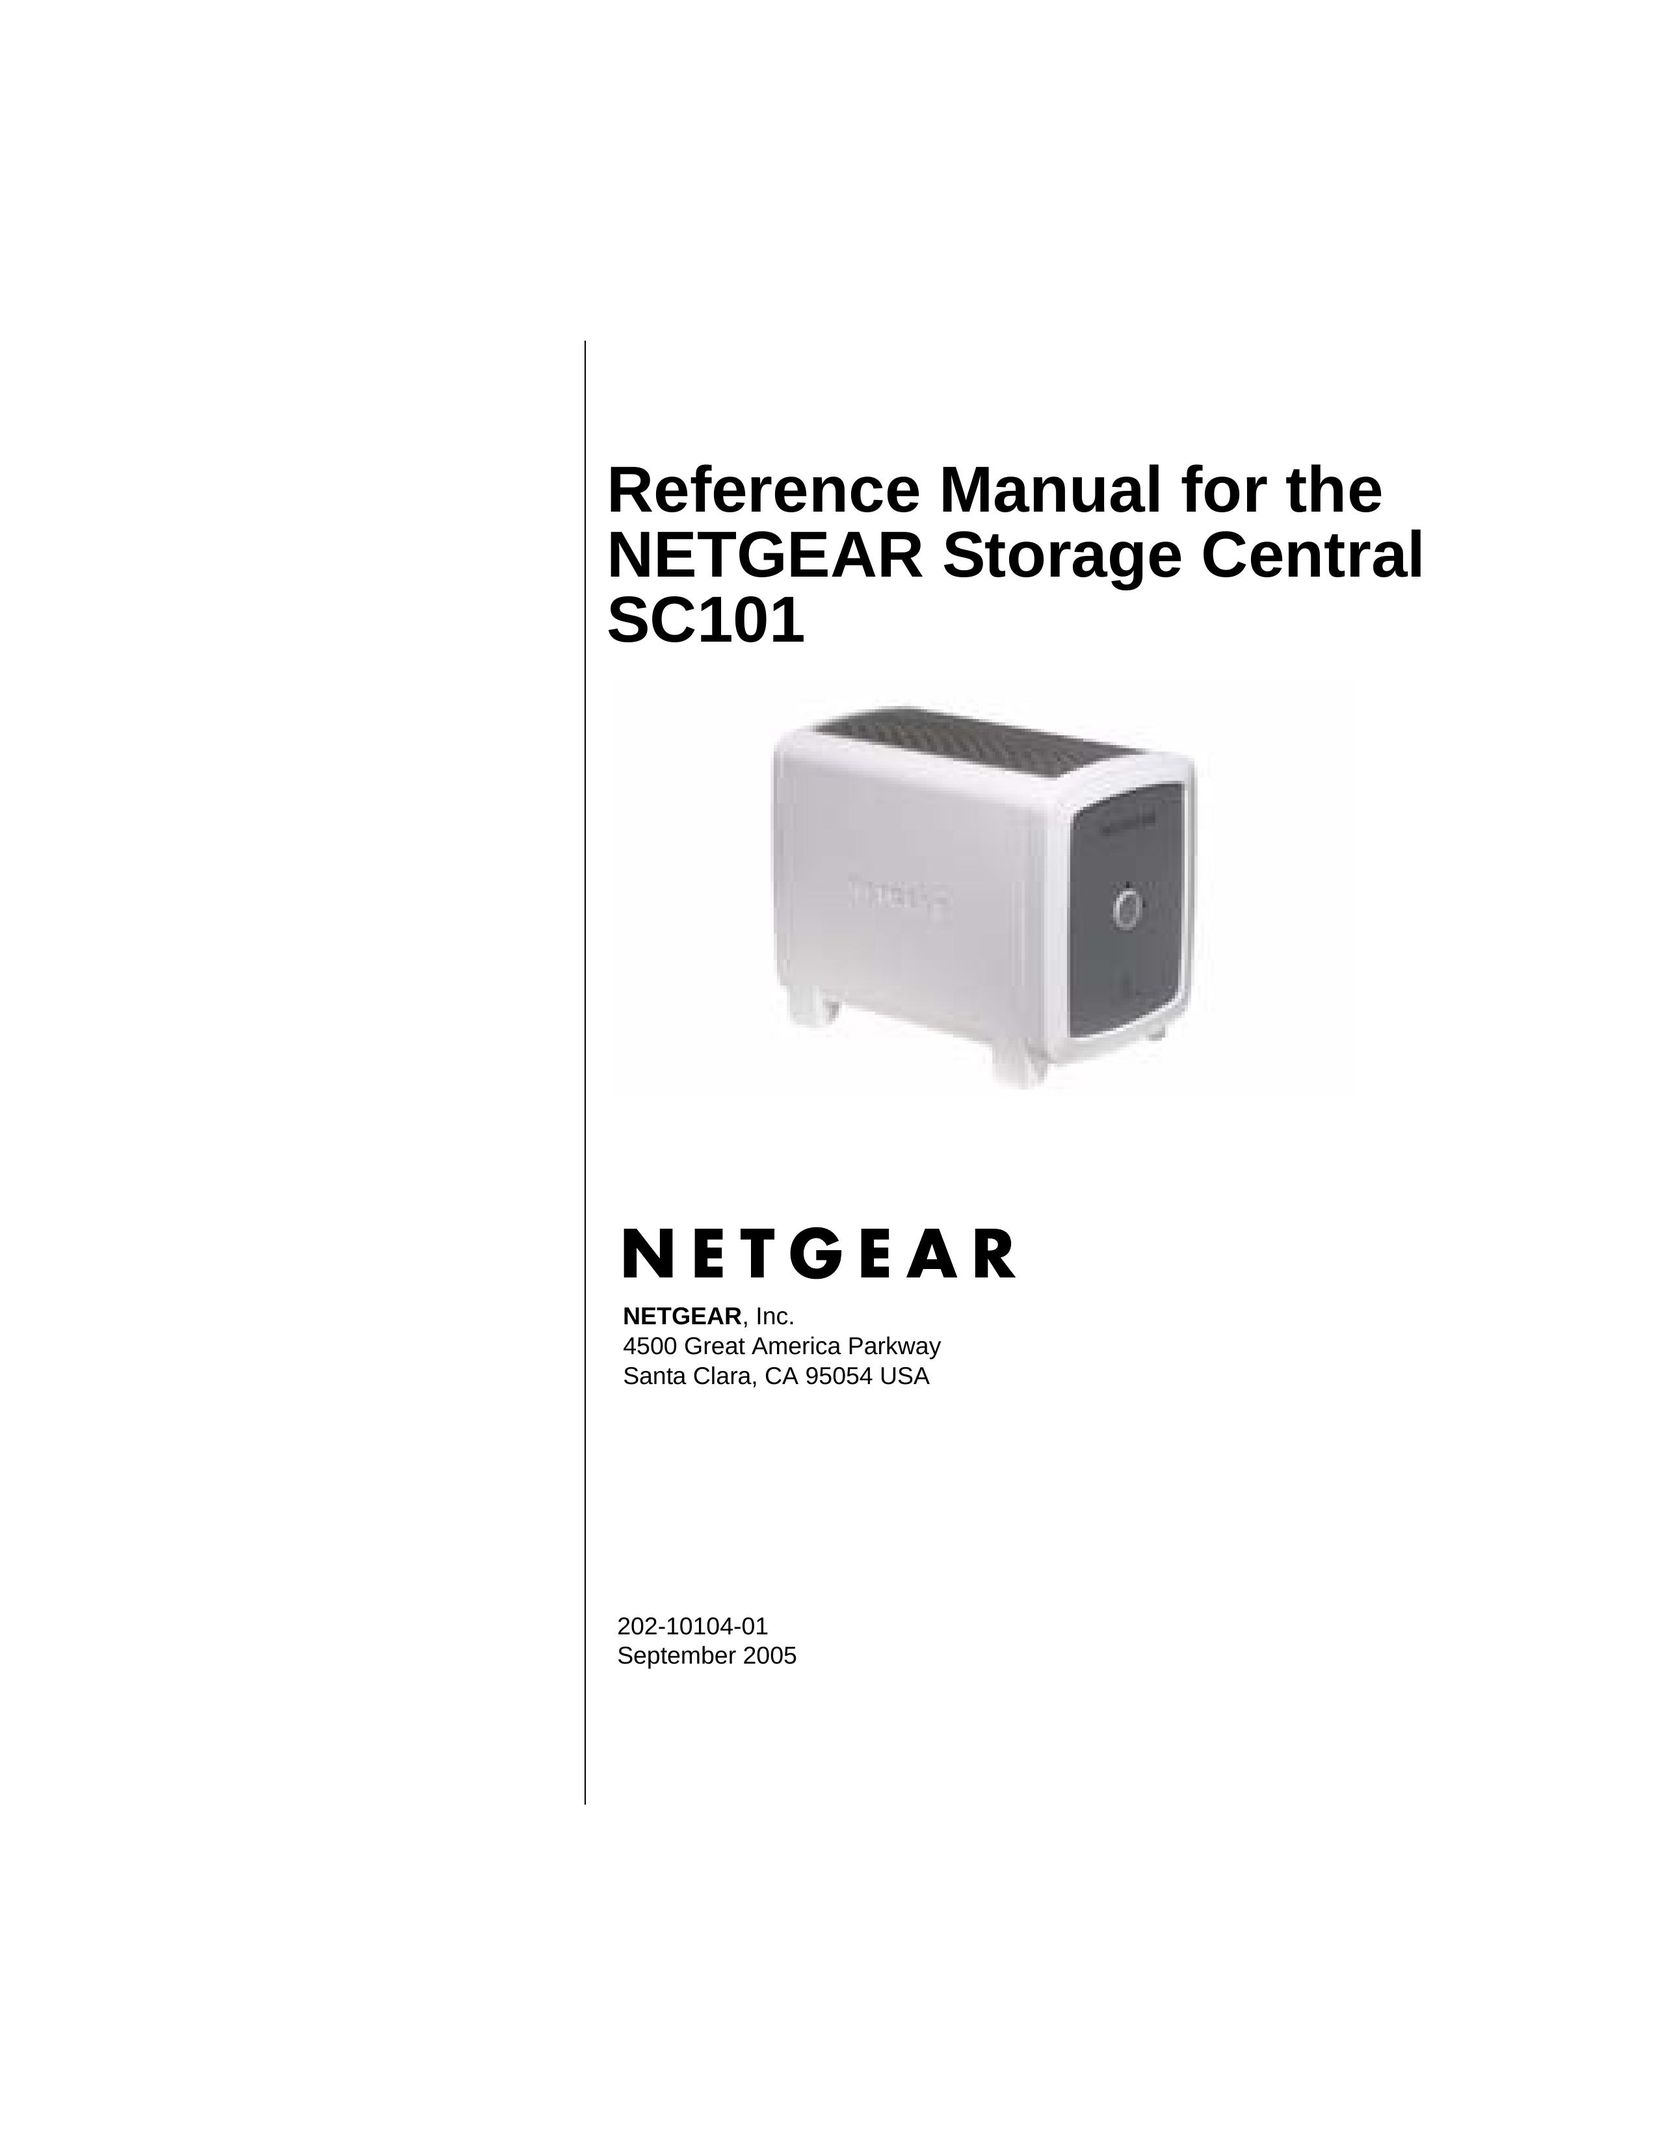 NETGEAR SC101 Tool Storage User Manual